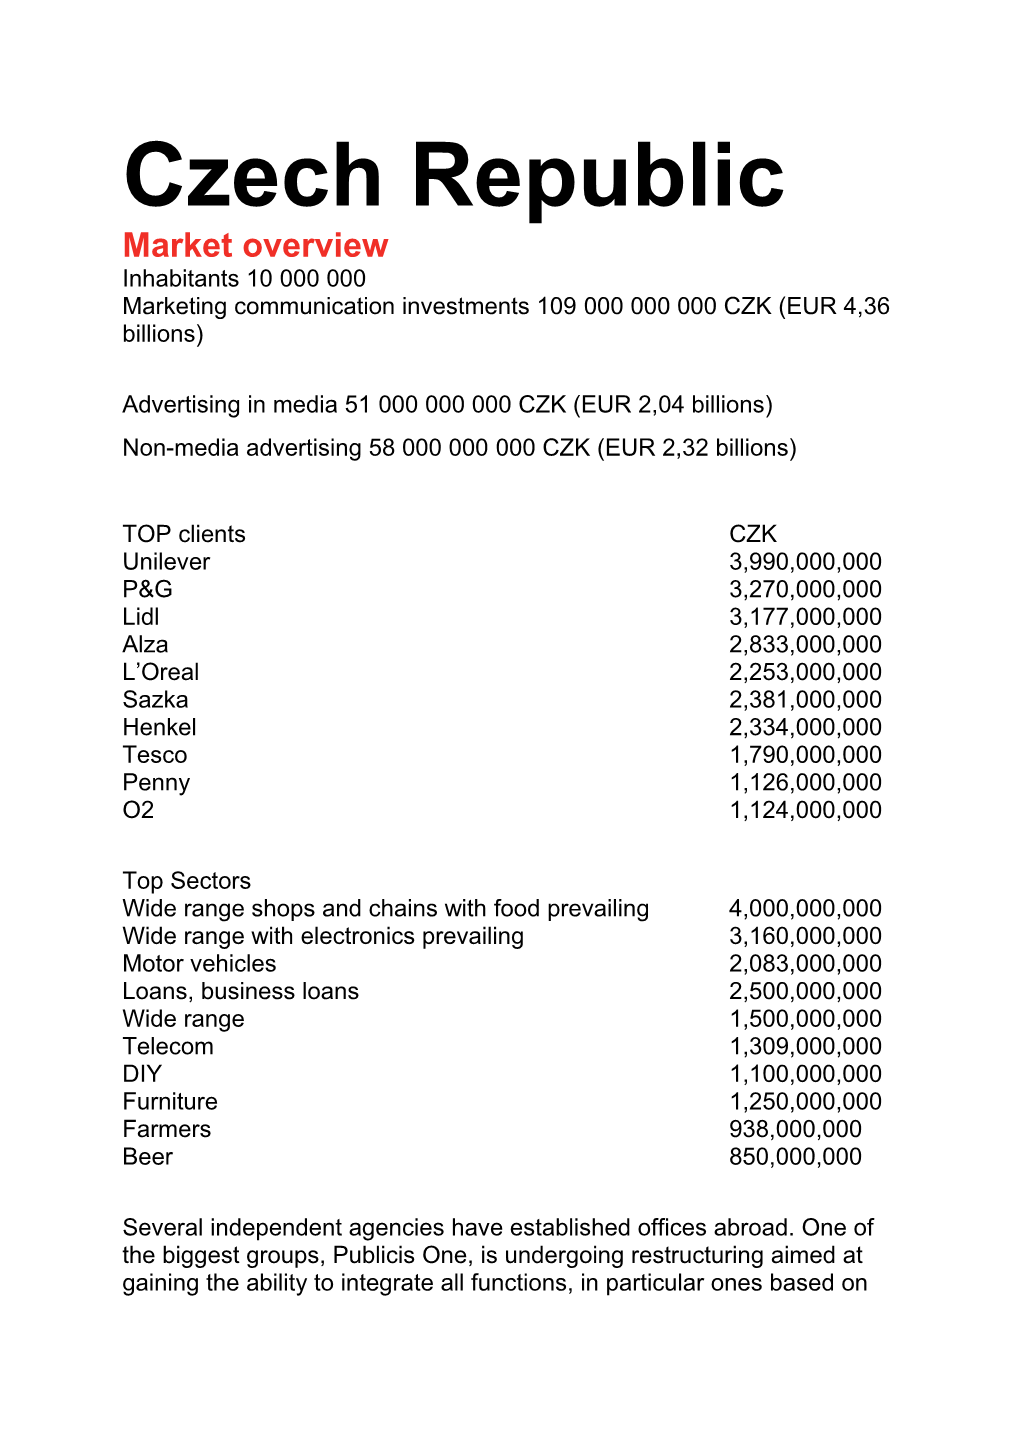 Advertising in Media 51000000000 CZK (EUR 2,04 Billions)